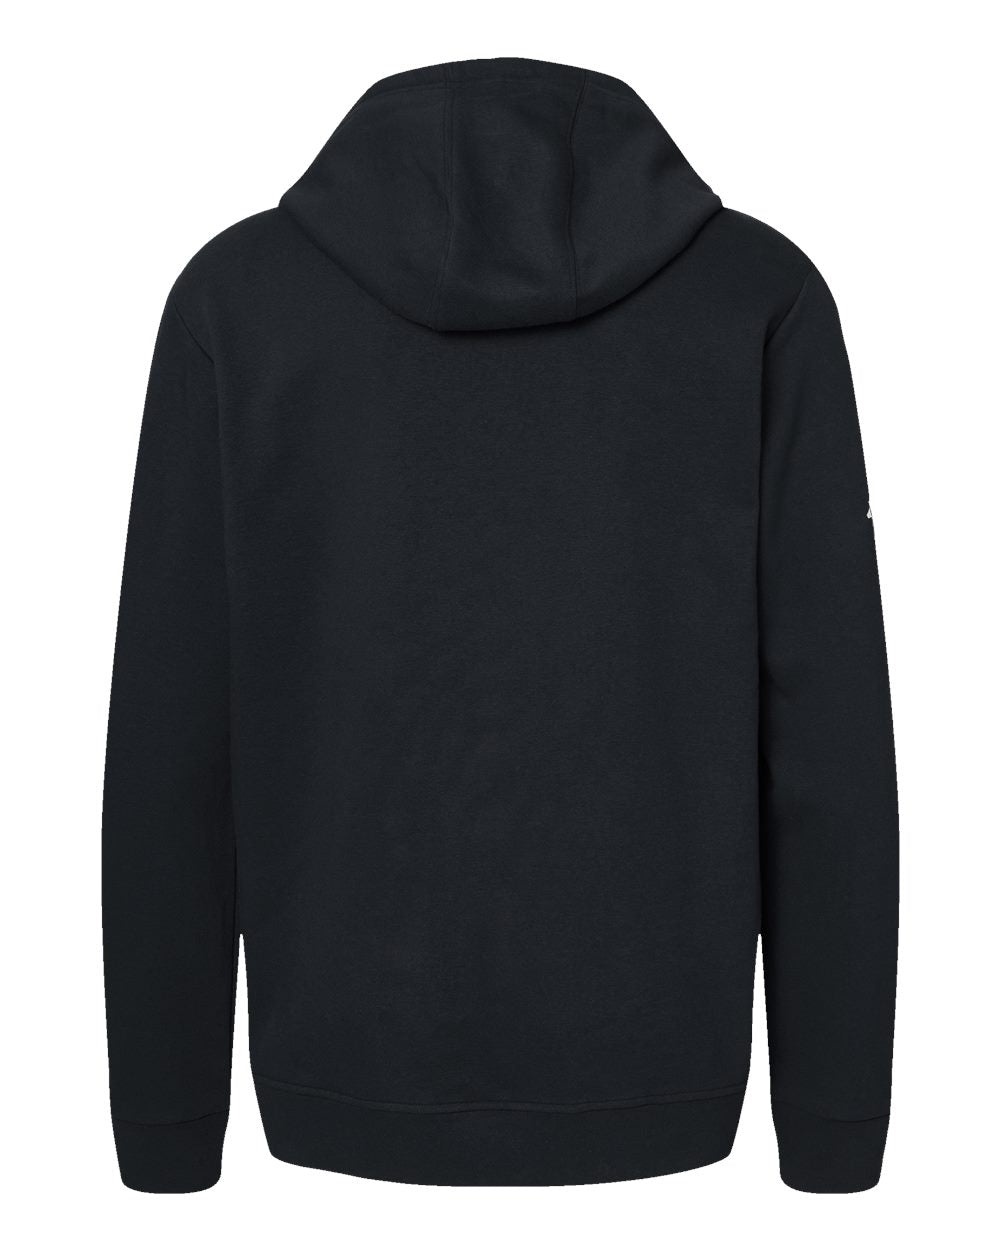 Hardwood - Adidas - Fleece Hooded Sweatshirt - Black - IMS Apparel A432Black-S